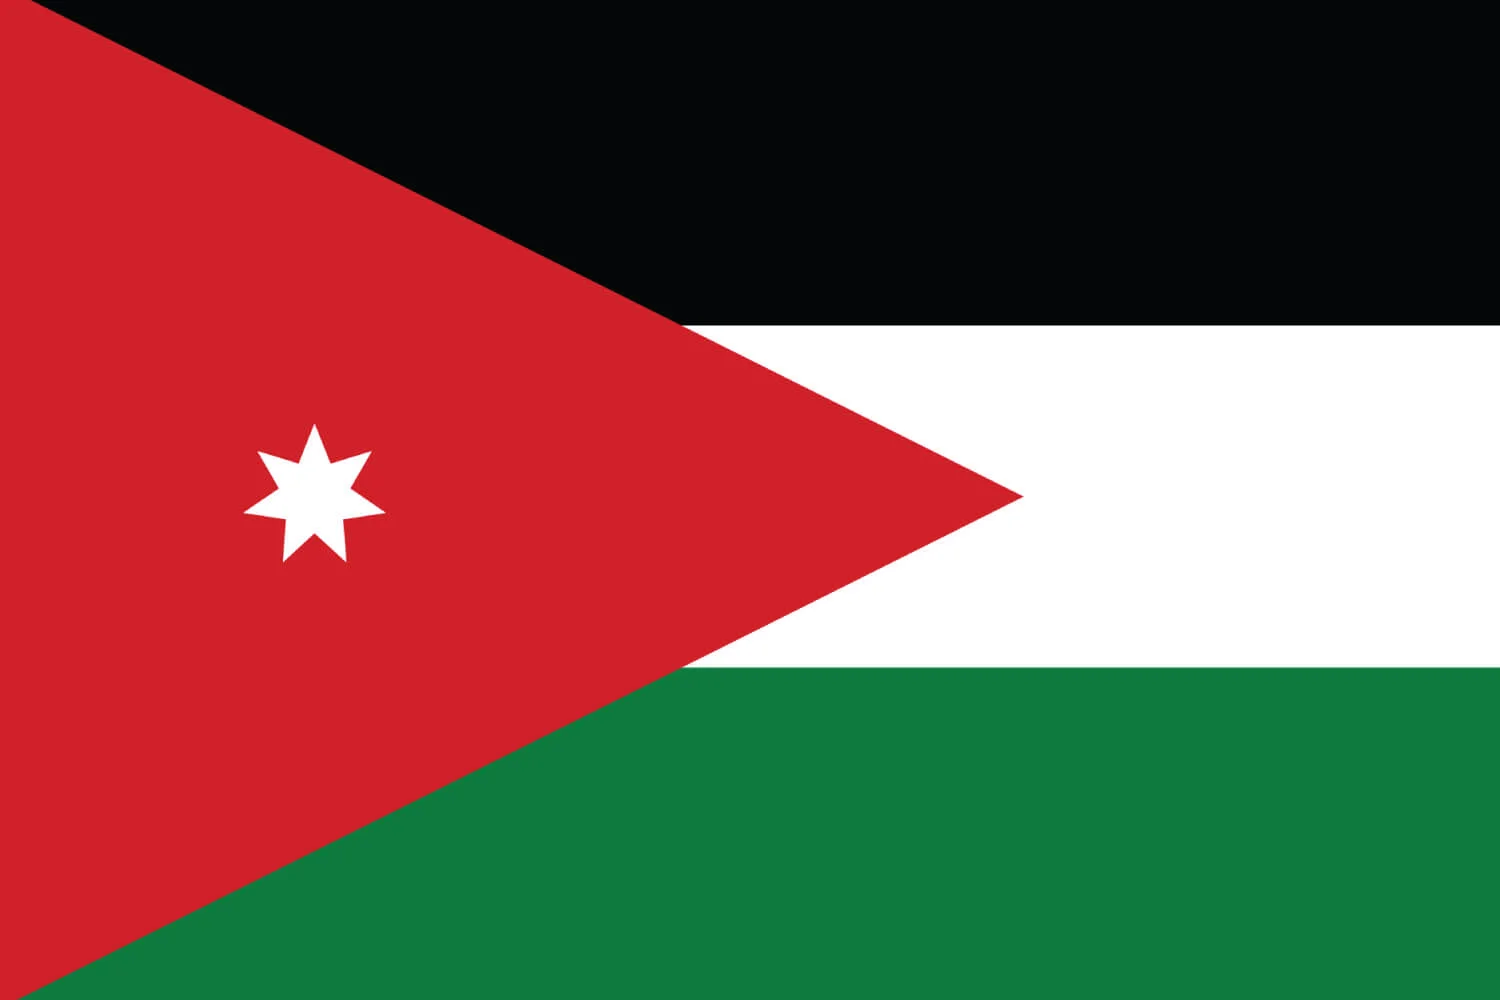 Jordan-Flag